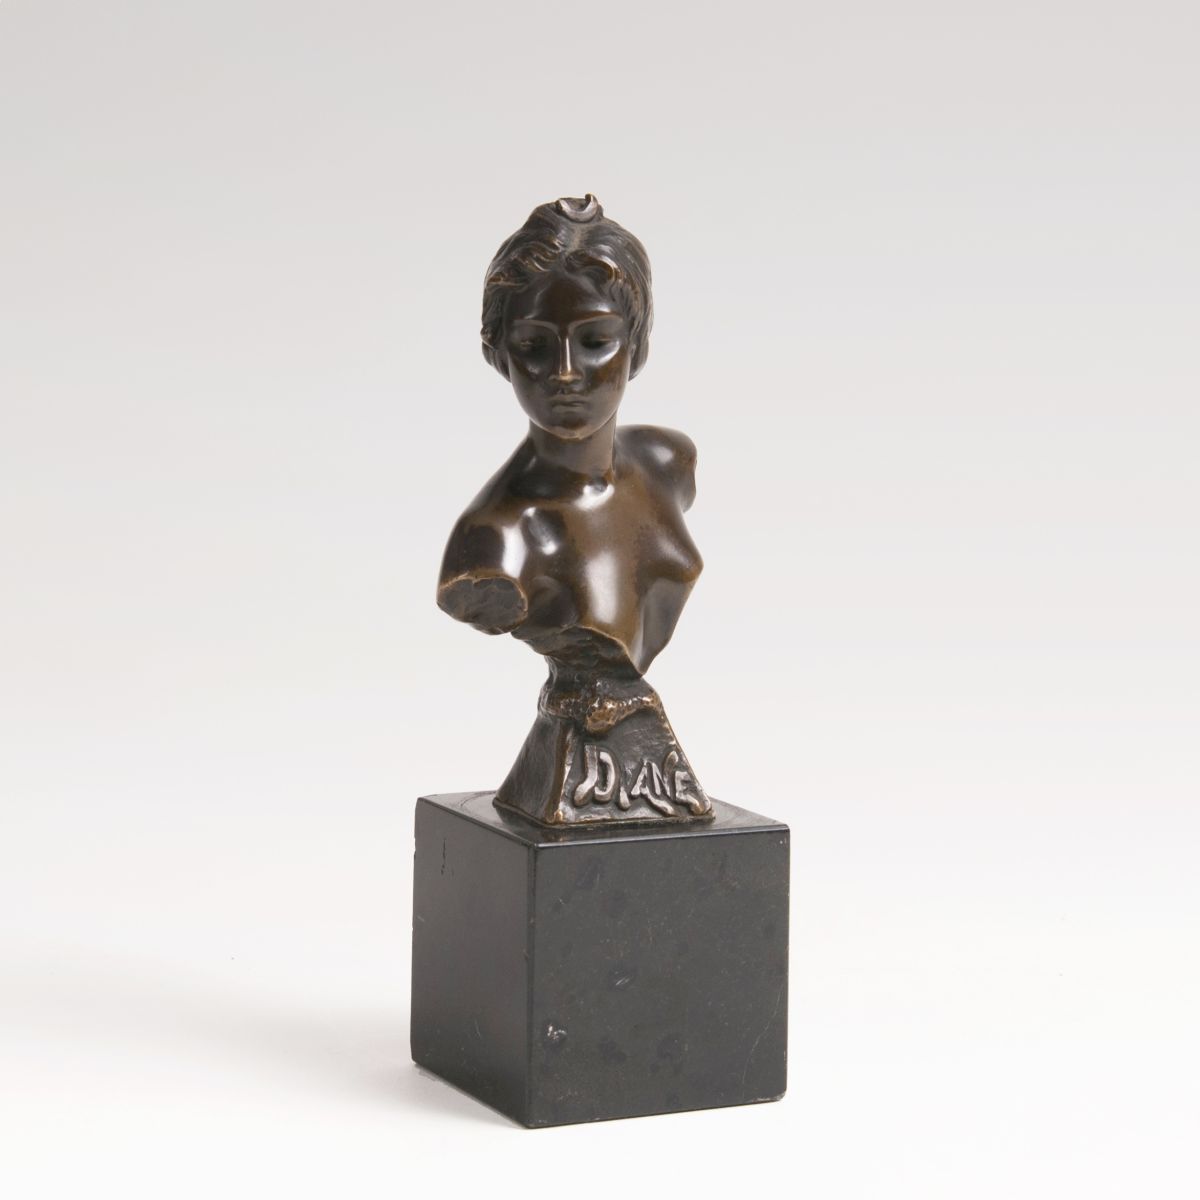 A small bronze bust 'Diane' after Emanuel Villanis